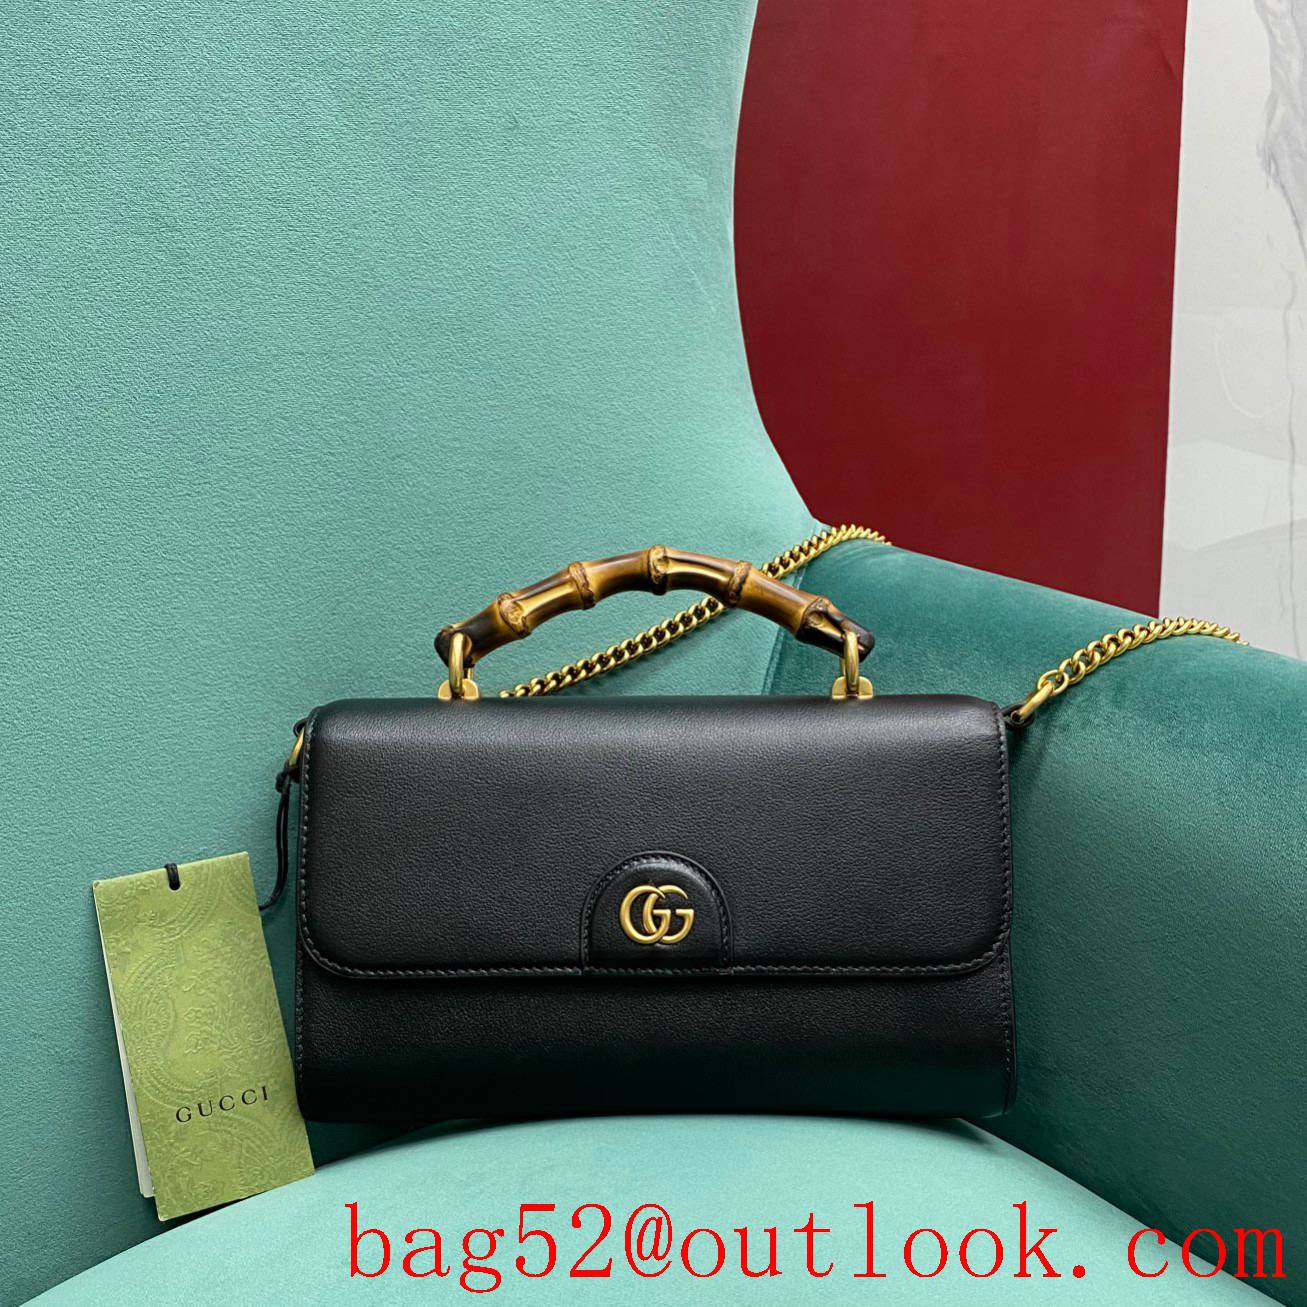 Gucci leather Bamboo chain black shoulder handbag